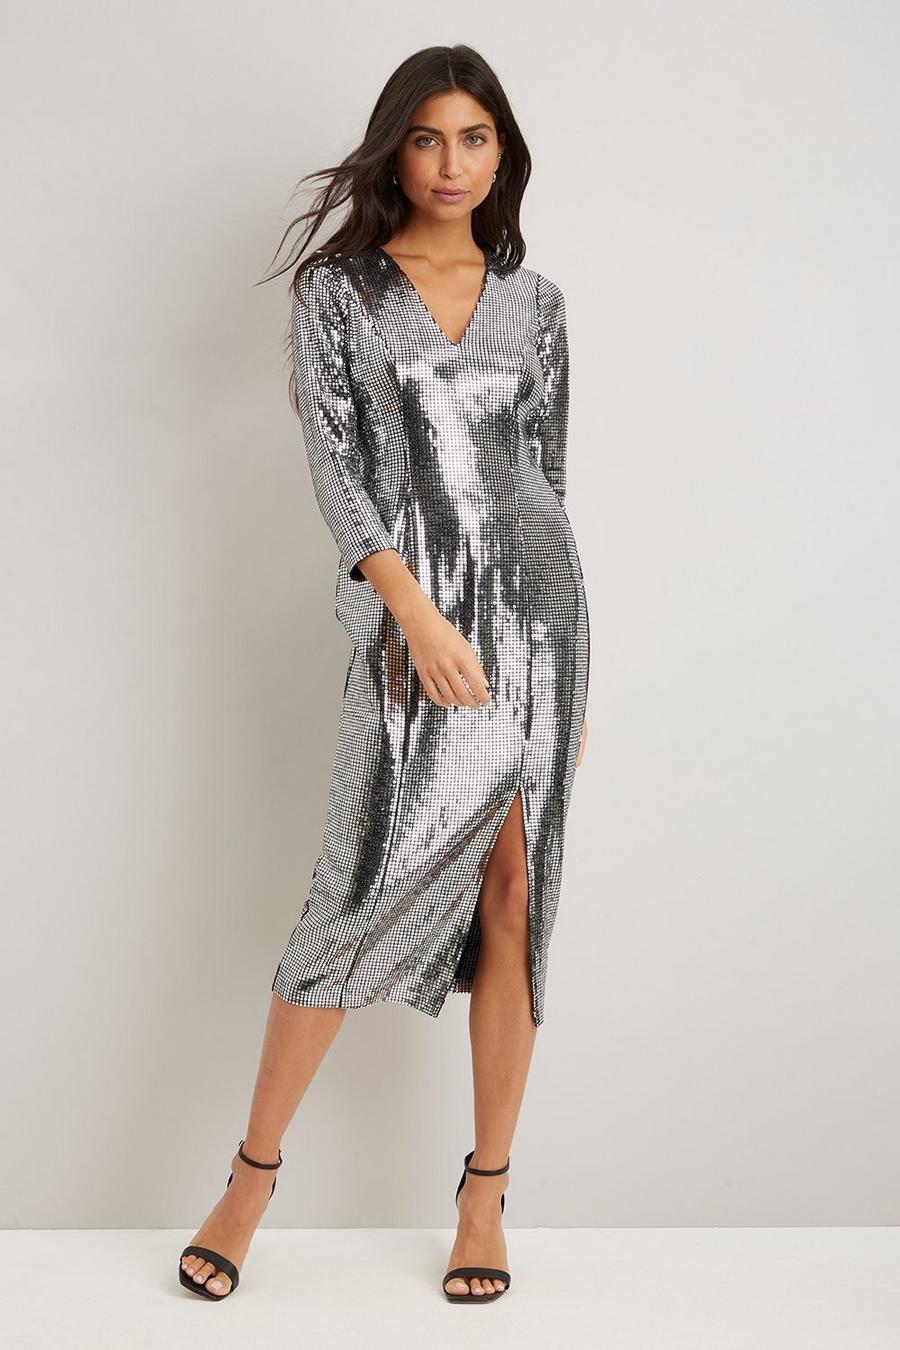 Silver Mirror Sequin Dress